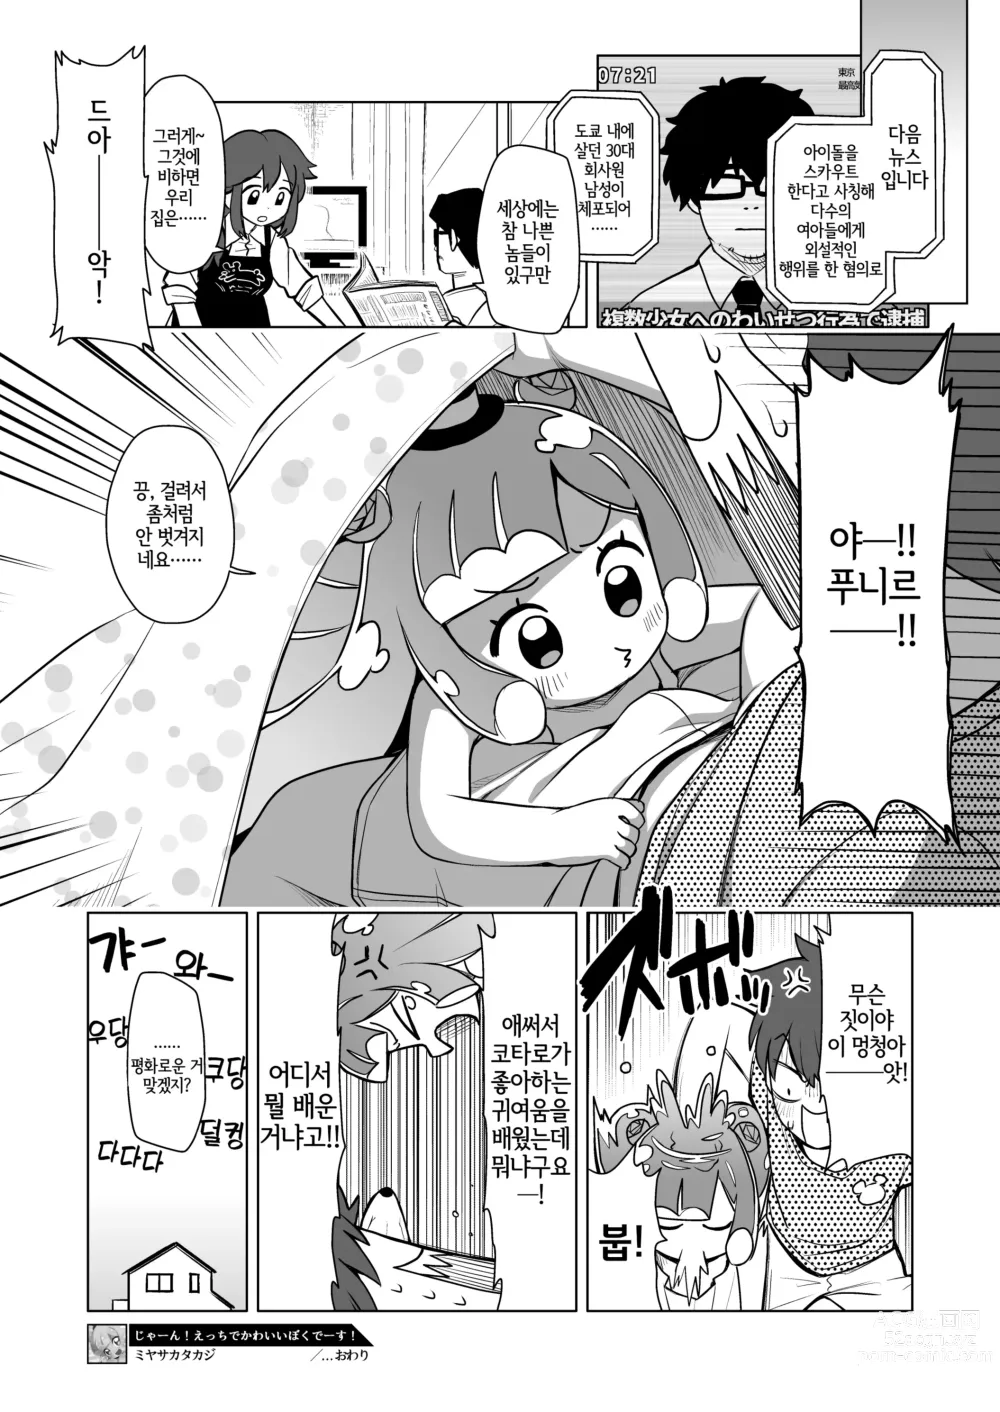 Page 14 of doujinshi 짜ㅡ안 아하고 귀여운 제라구ㅡ요!